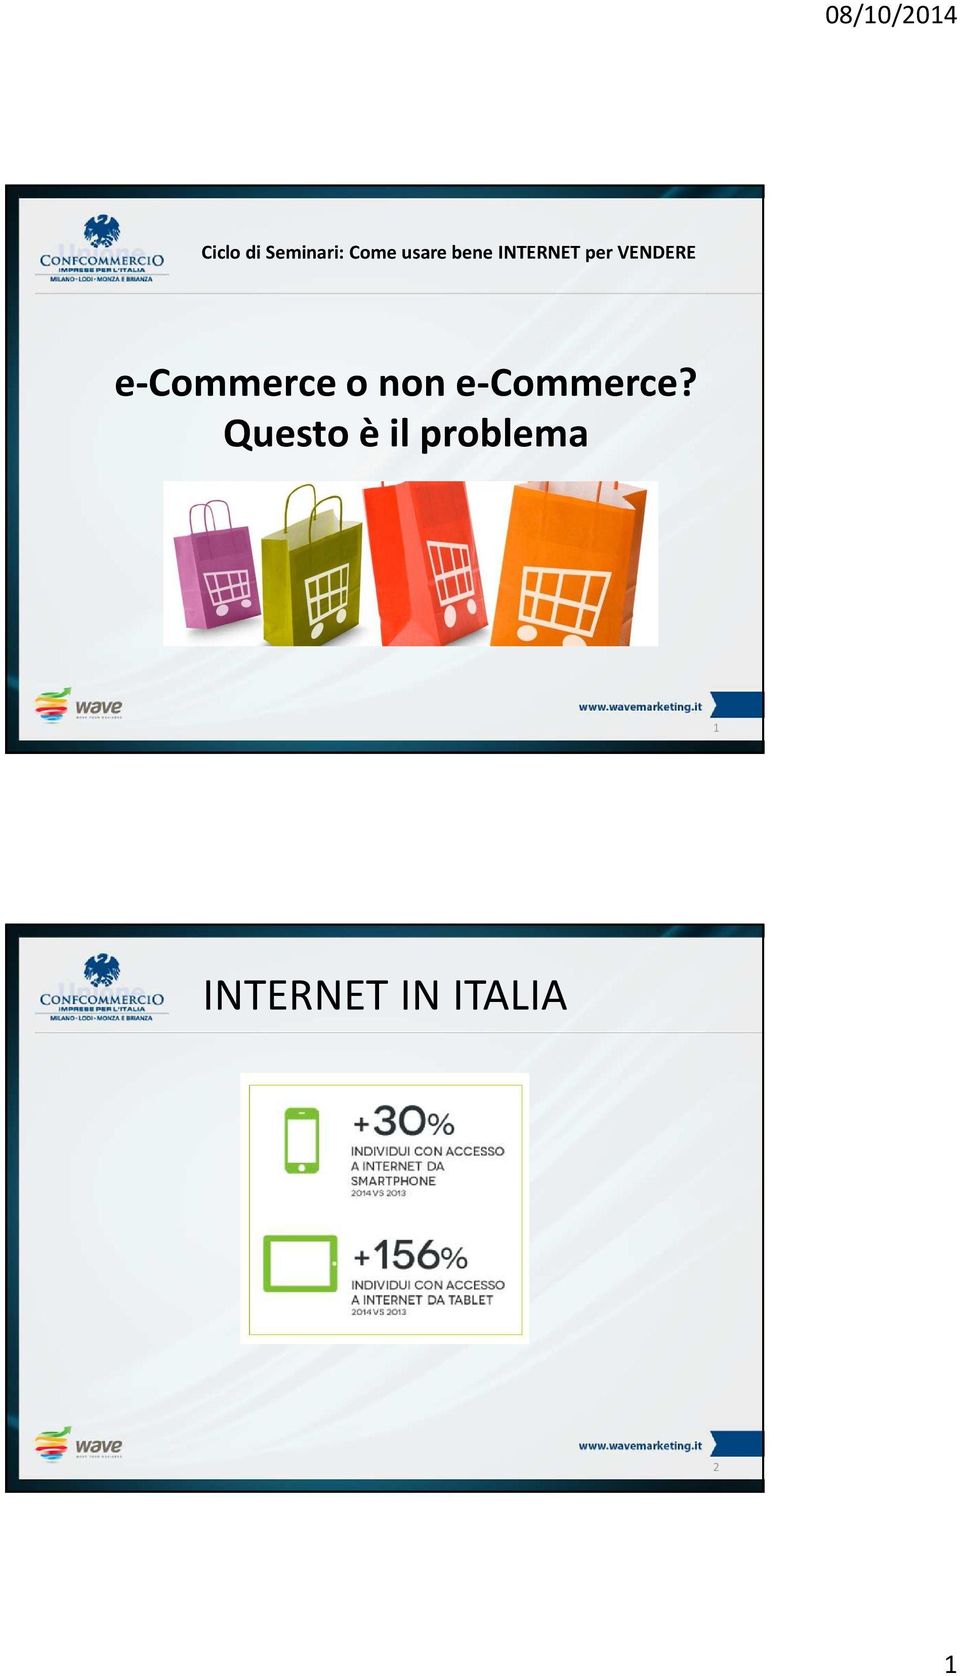 e-commerce o non e-commerce?